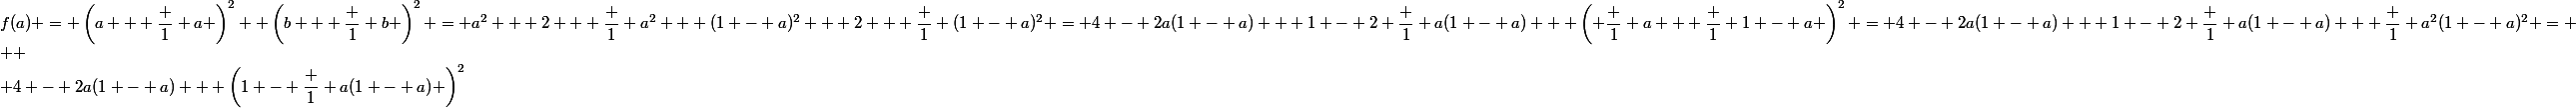 f(a) = \left(a + \dfrac 1 a \right)^2+ \left(b + \dfrac 1 b \right)^2 = a^2 + 2 + \dfrac 1 {a^2} + (1 - a)^2 + 2 + \dfrac 1 {(1 - a)^2} = 4 - 2a(1 - a) + 1 - 2 \dfrac 1 {a(1 - a)} + \left( \dfrac 1 a + \dfrac 1 {1 - a} \right)^2 = 4 - 2a(1 - a) + 1 - 2 \dfrac 1 {a(1 - a)} + \dfrac 1 {a^2(1 - a)^2} =
 \\ 
 \\ 4 - 2a(1 - a) + \left(1 - \dfrac 1 {a(1 - a)} \right)^2